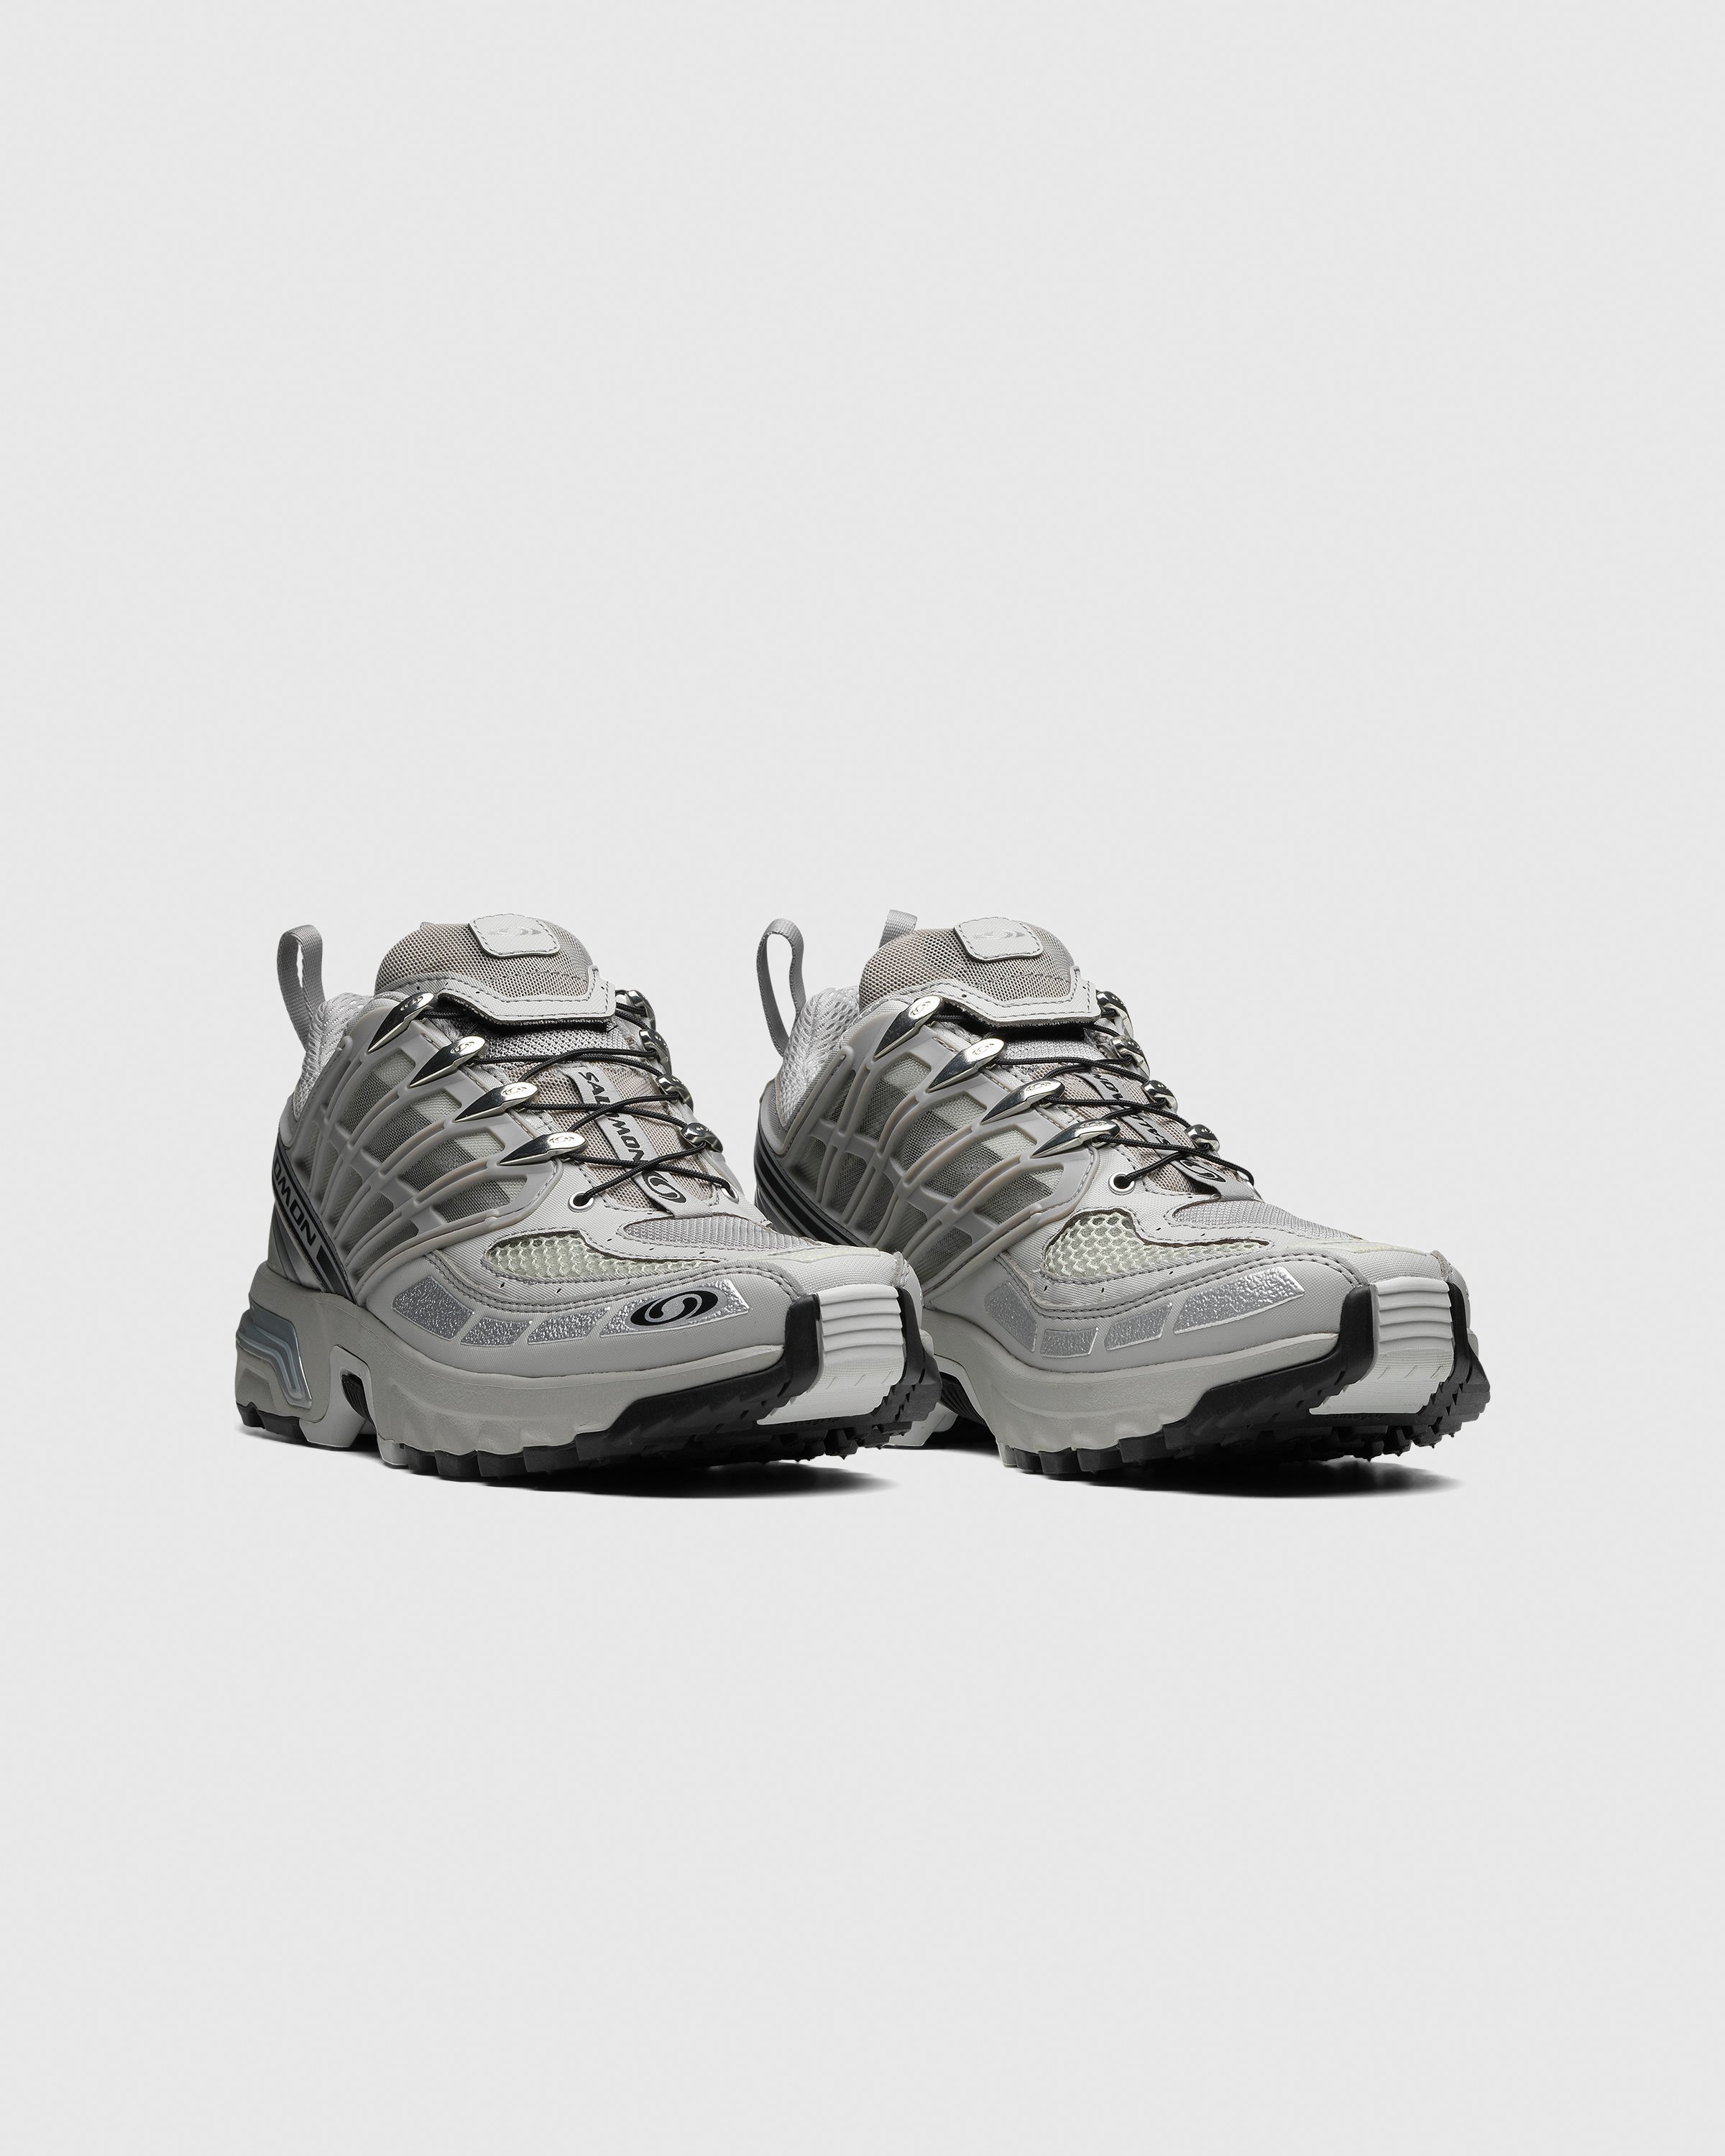 Salomon - ACS PRO Metal/Ghost Gray/Silver Metallic X - Footwear - Silver - Image 2